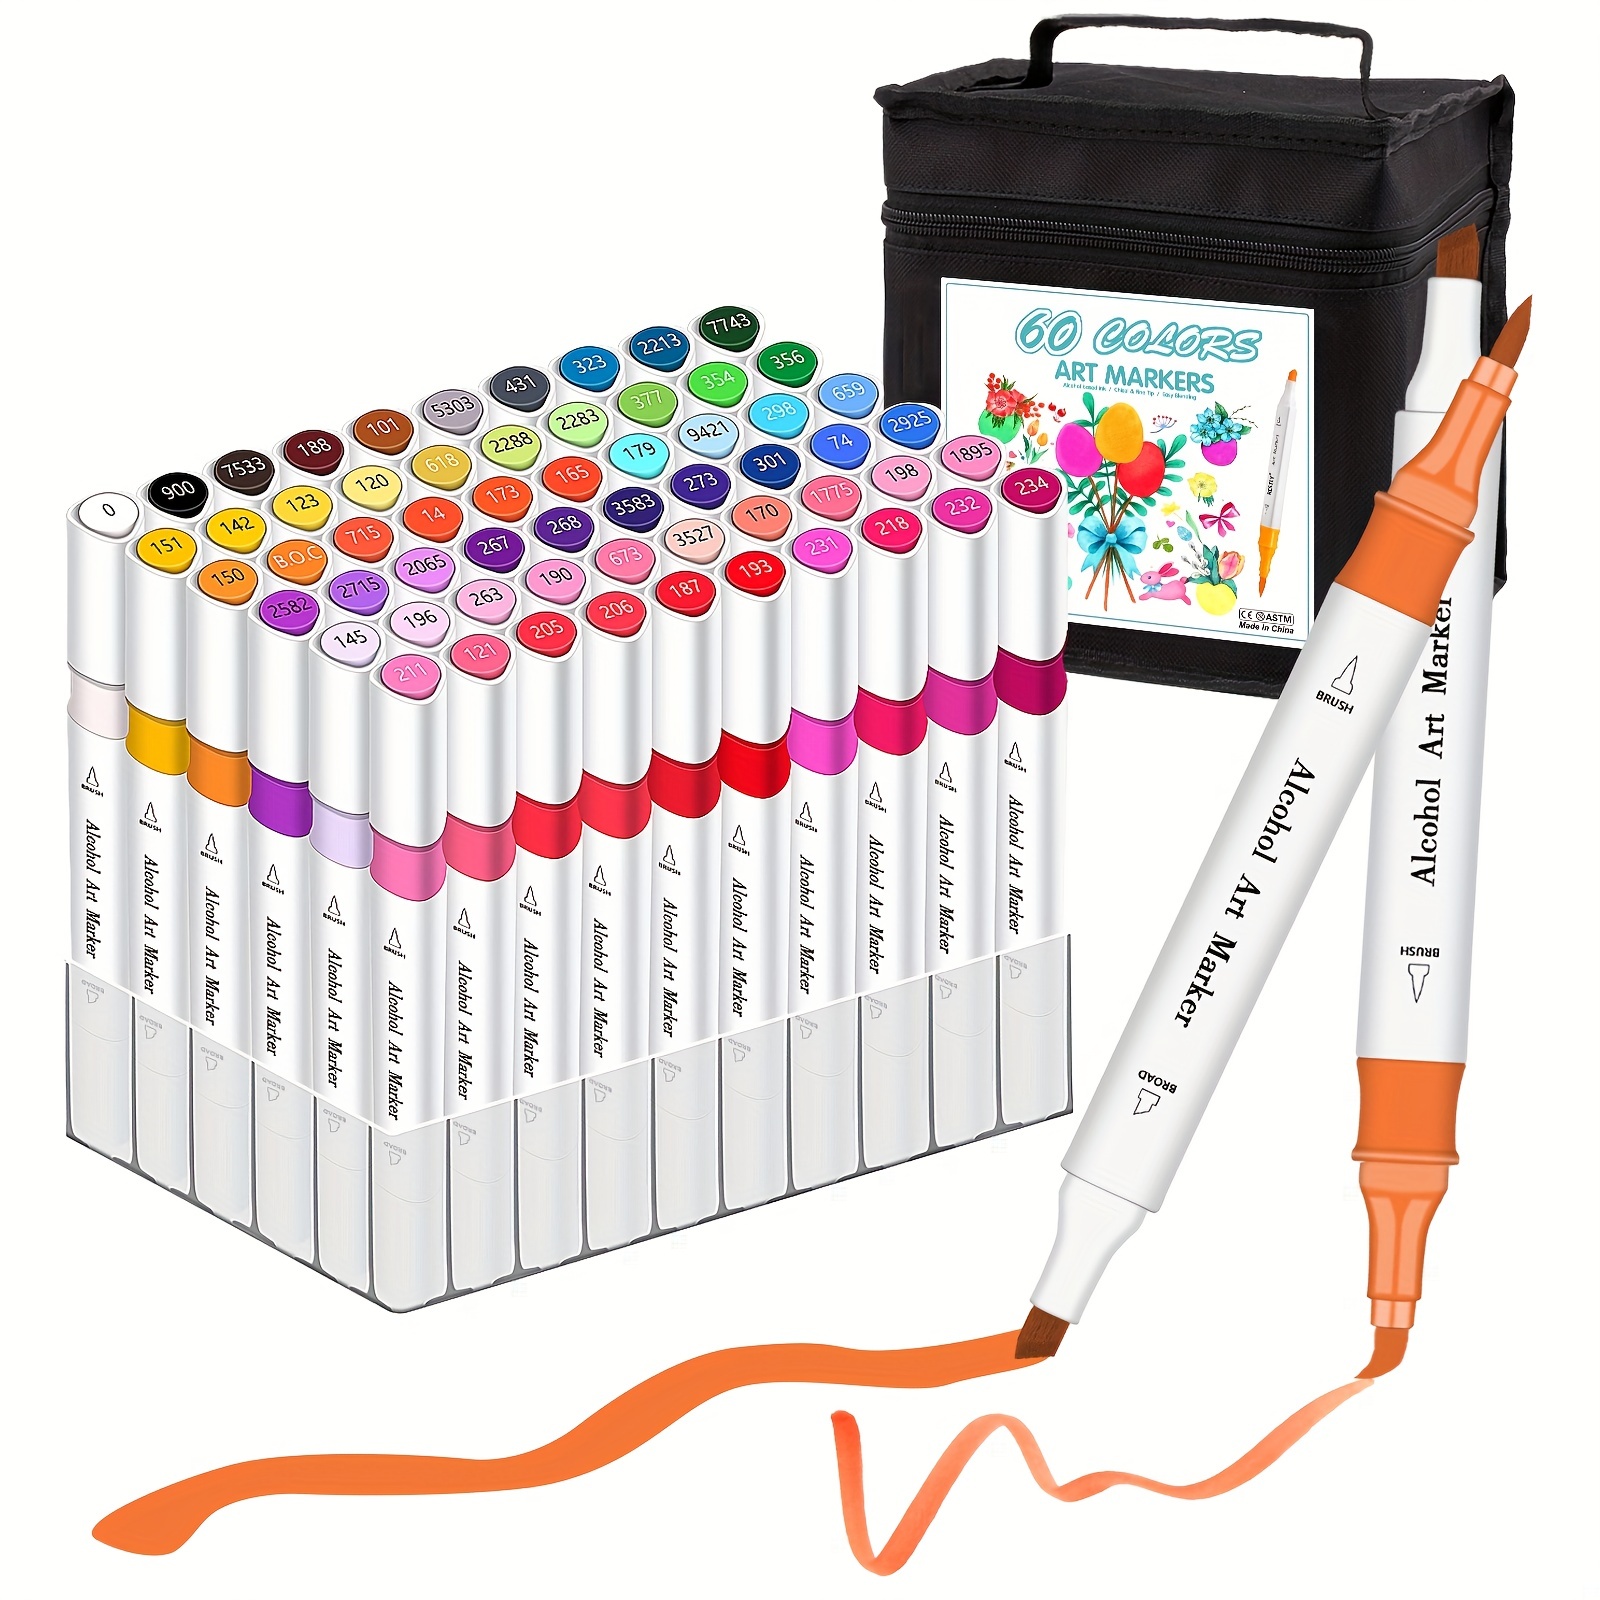 THR3E STROKES Caliart Brush Pens for Coloring Books